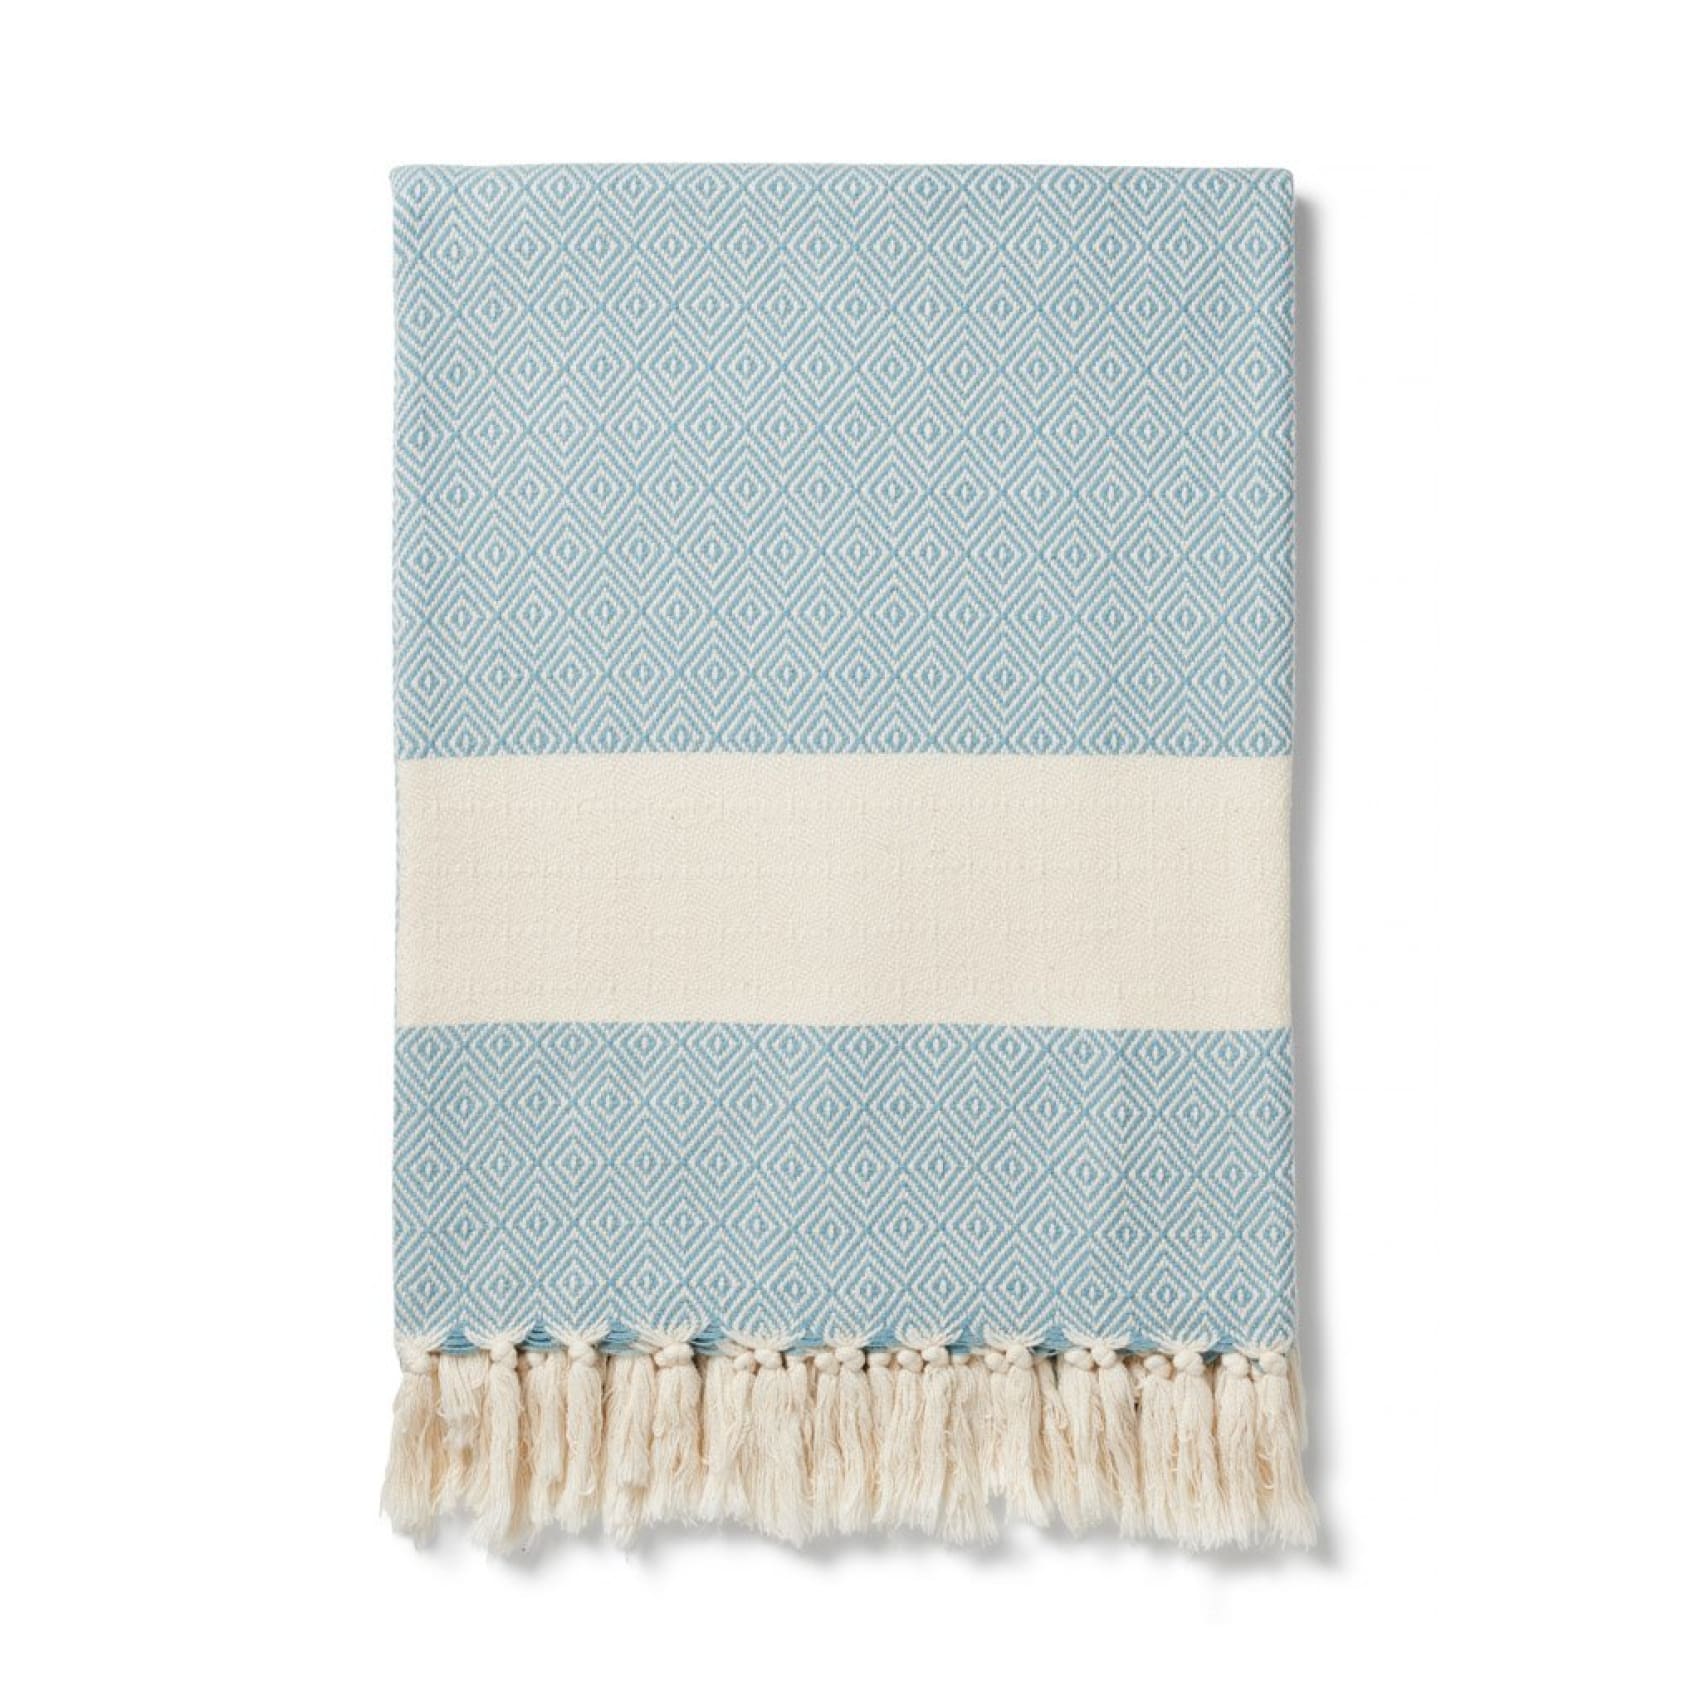 damla-scarves-teal-best-sellers-black-blue-cotton-green-luks-linen-sleeve-electric-923.jpg